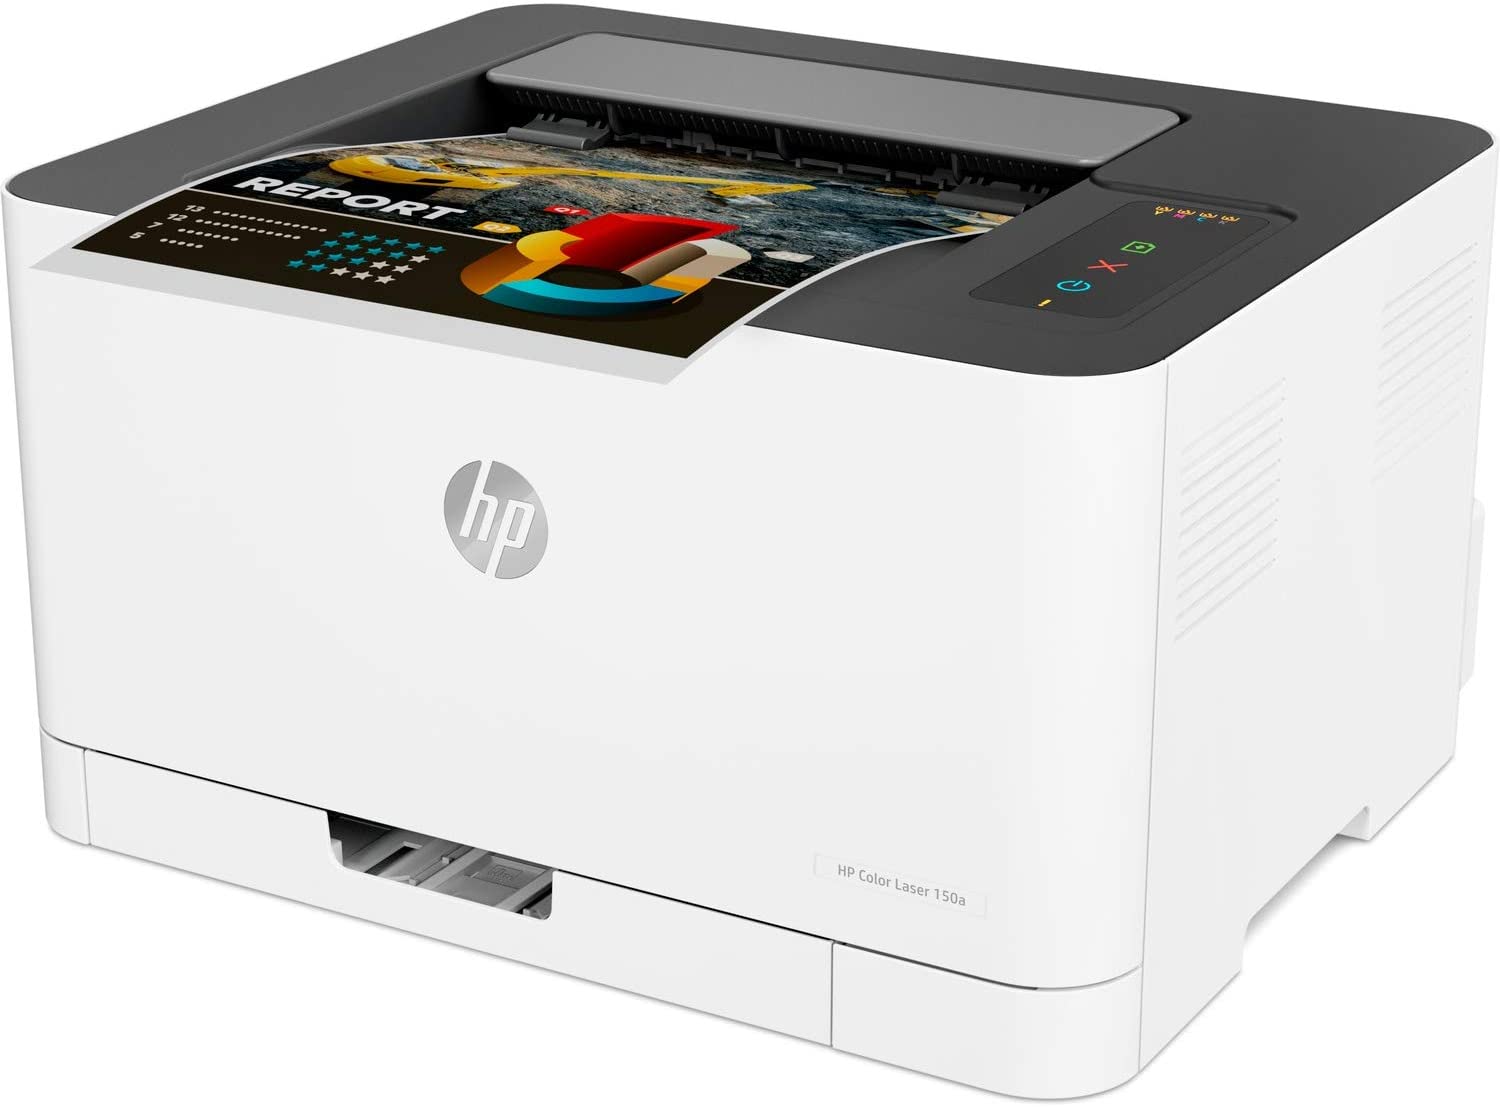 Impresora color láser 150a